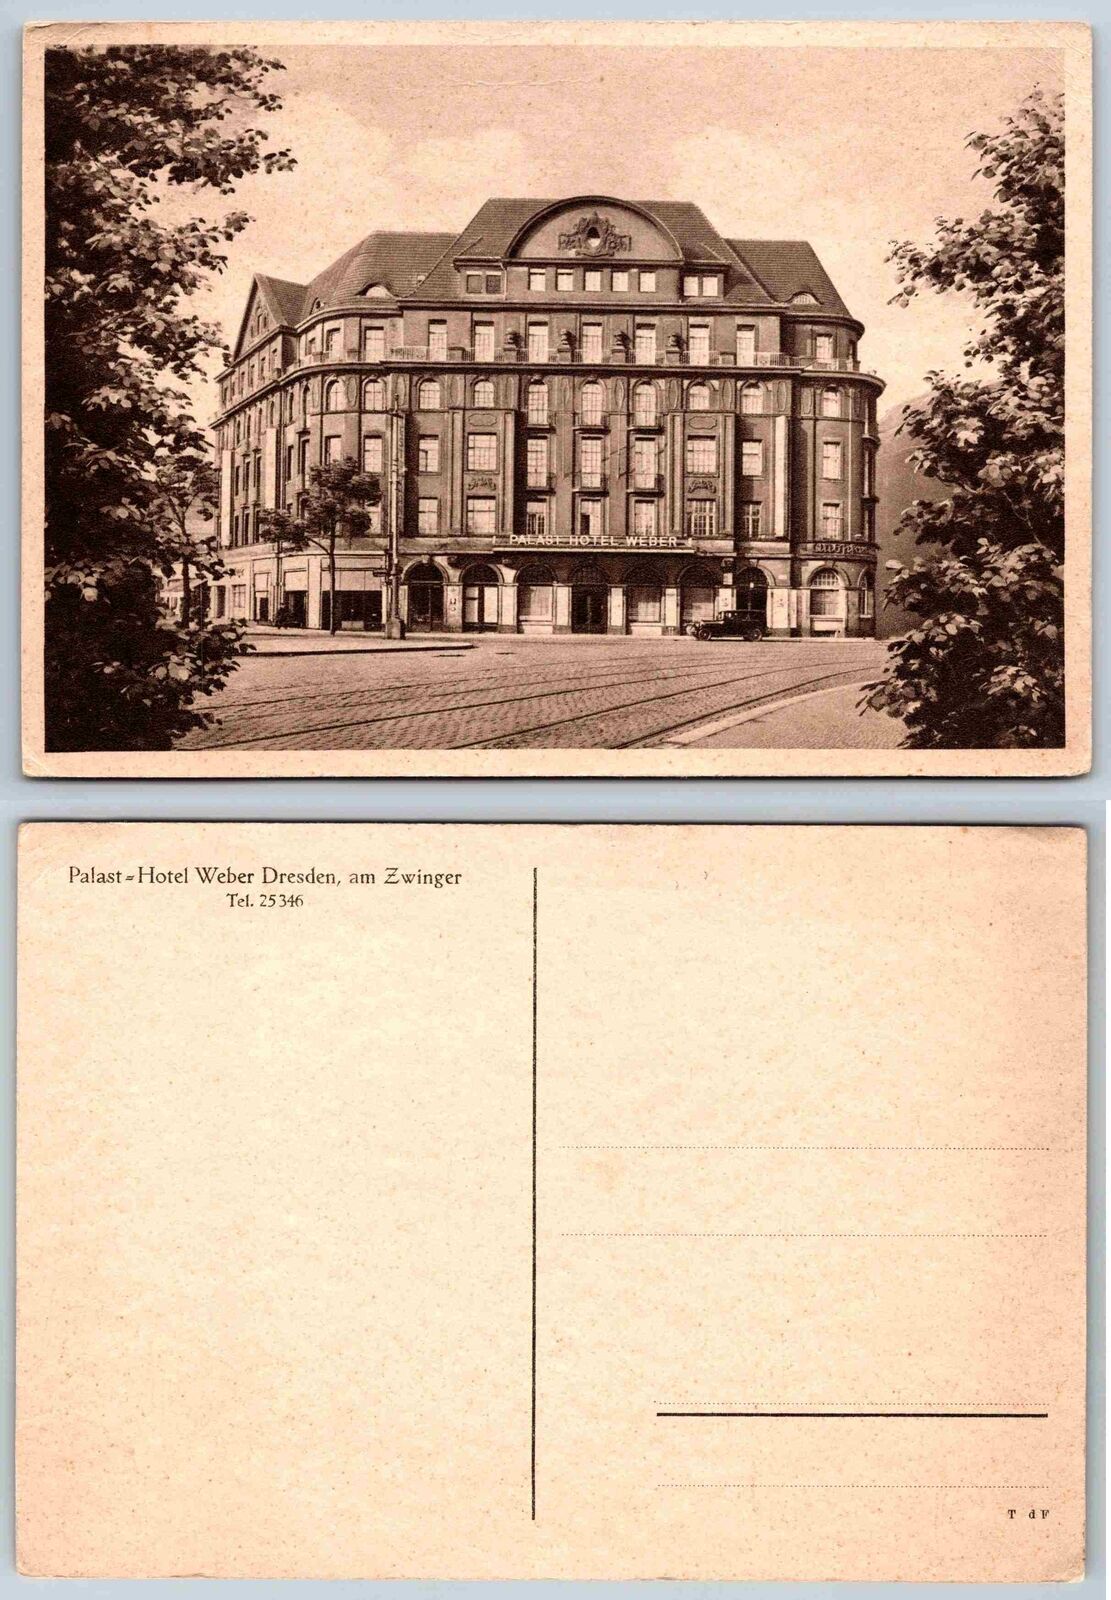 Vintage Postcard - Palast - Hotel Weber Dresden, am Zwinger Dersden, Zwinger